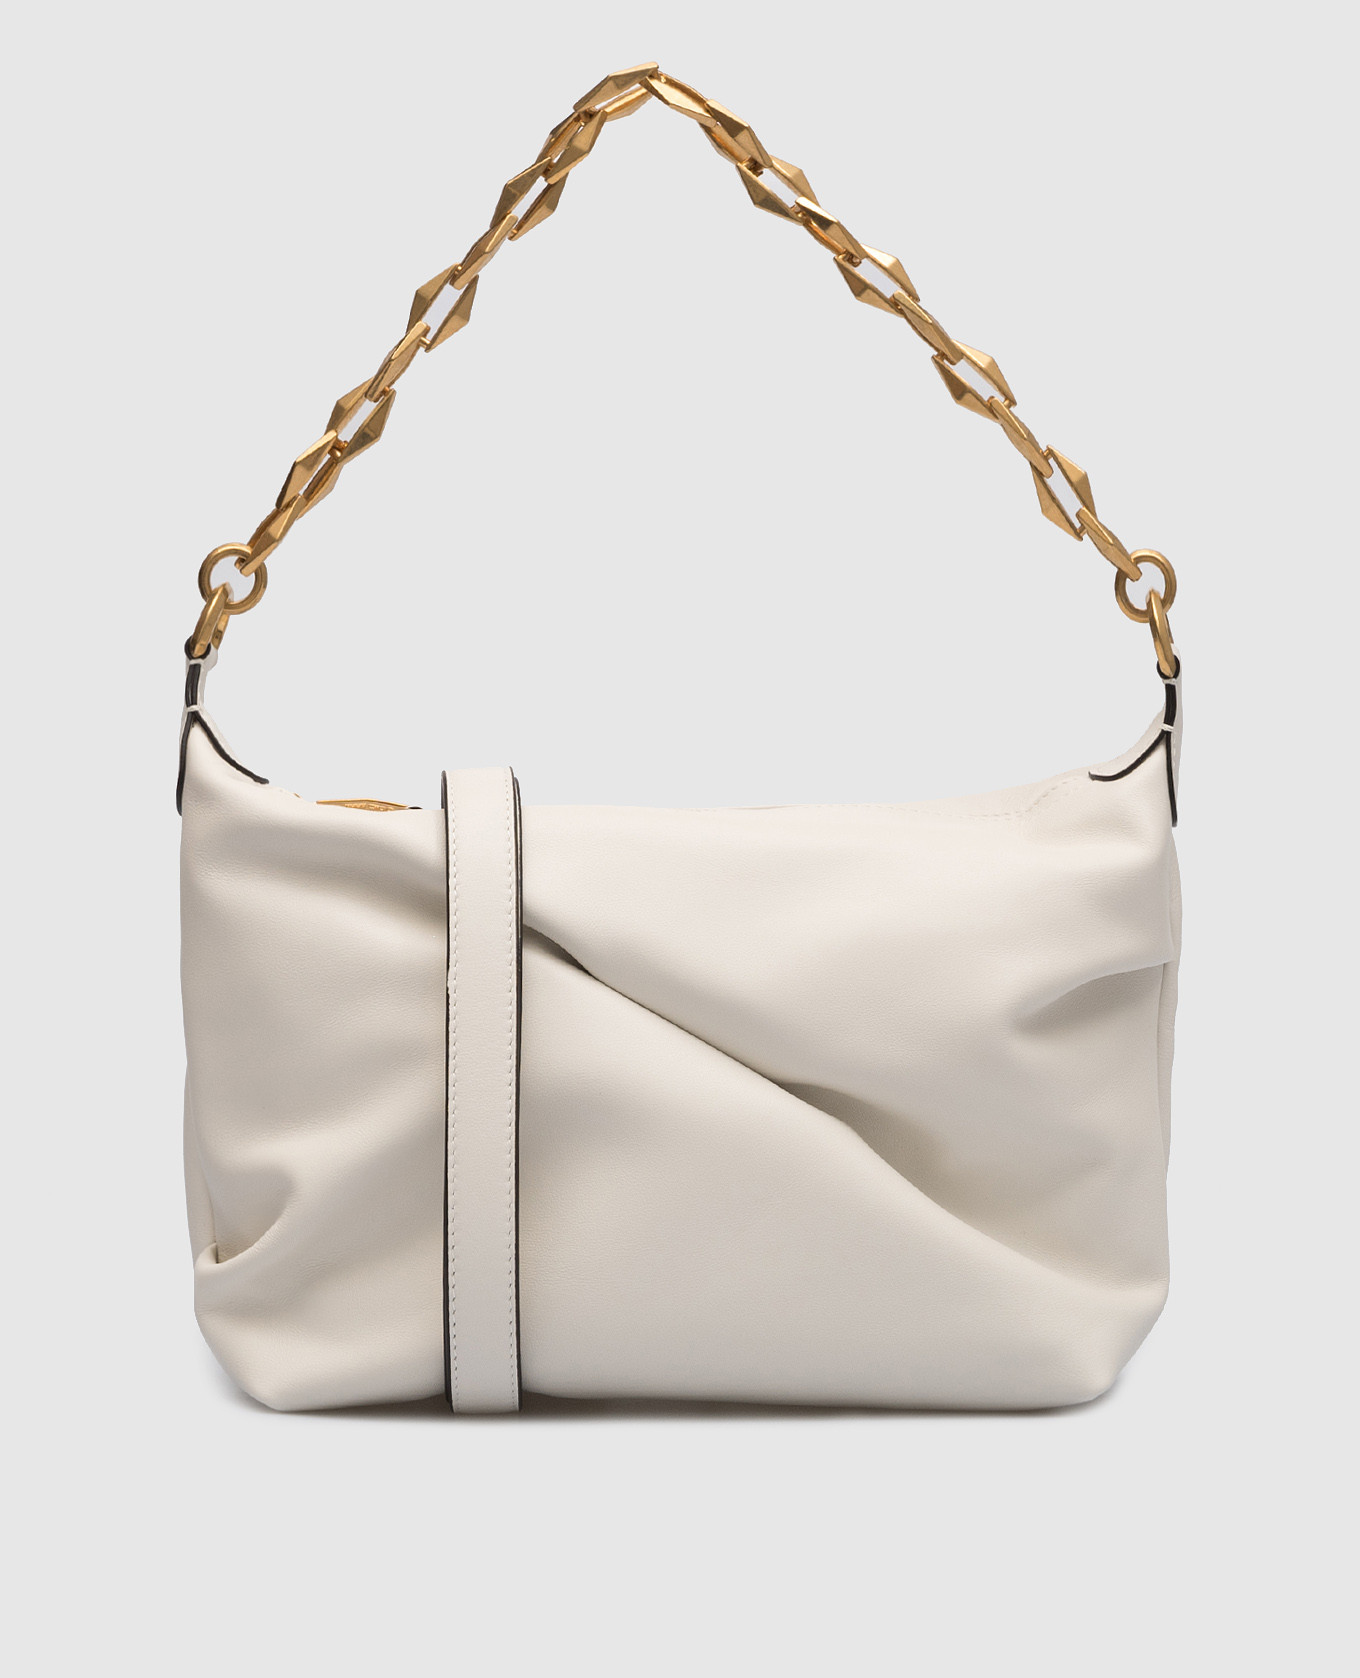 Diamond Soft white leather hobo bag